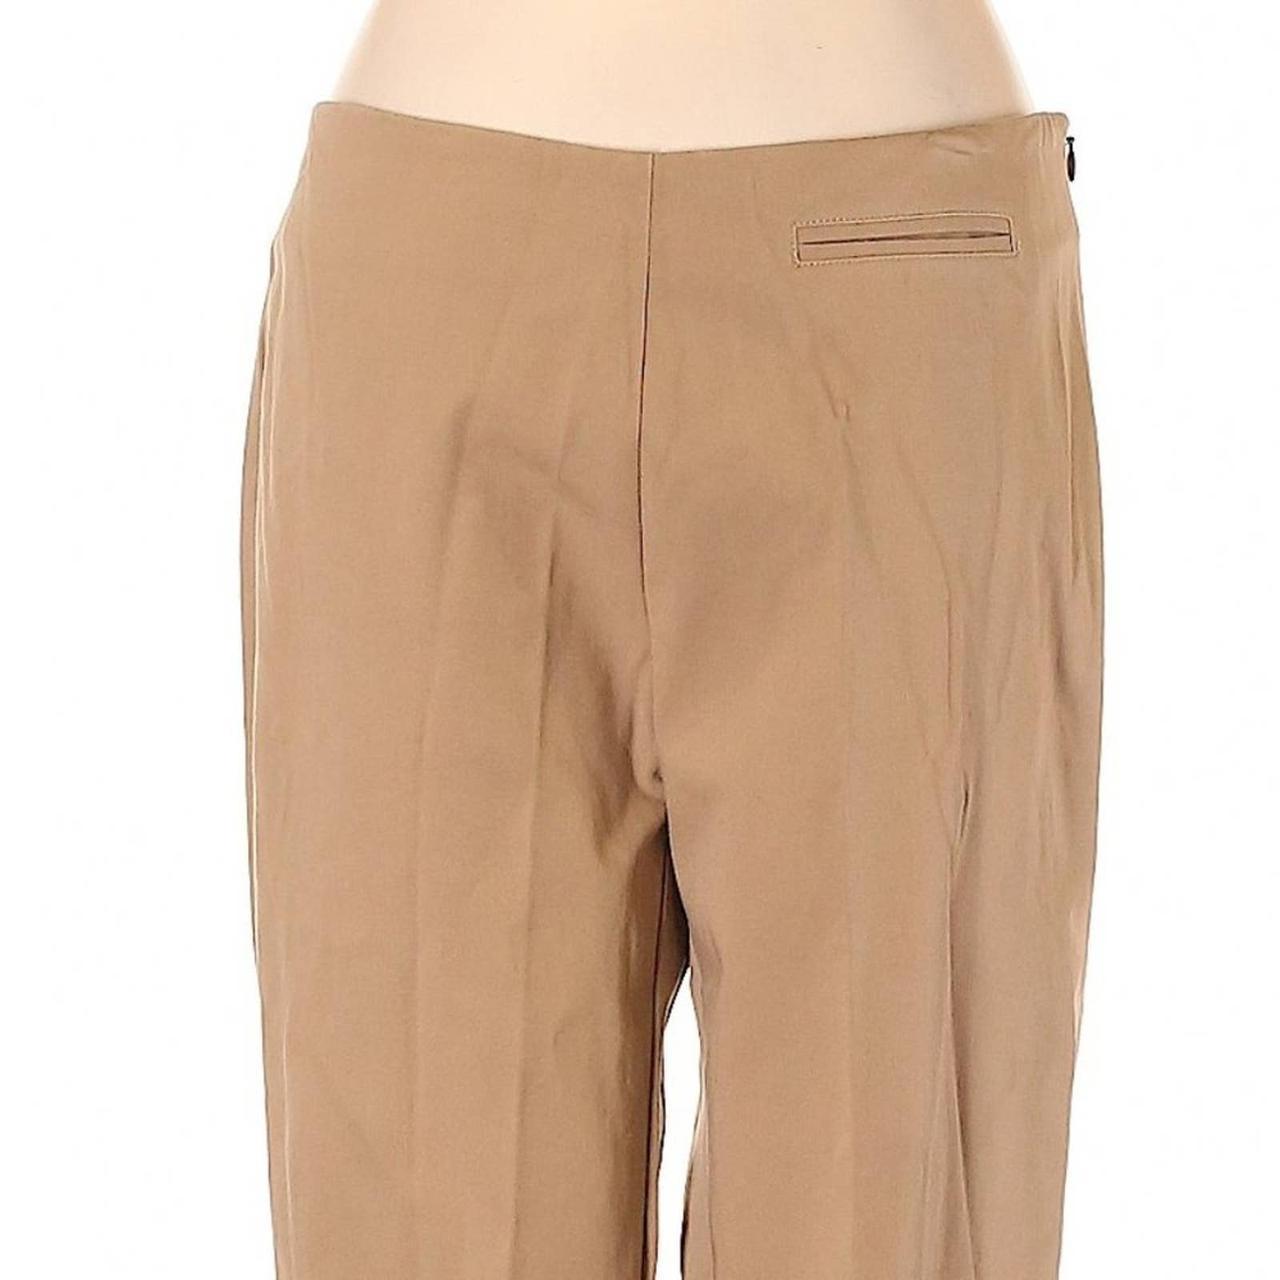 Jenne Maag Women Tan Dress Pants Size: Small